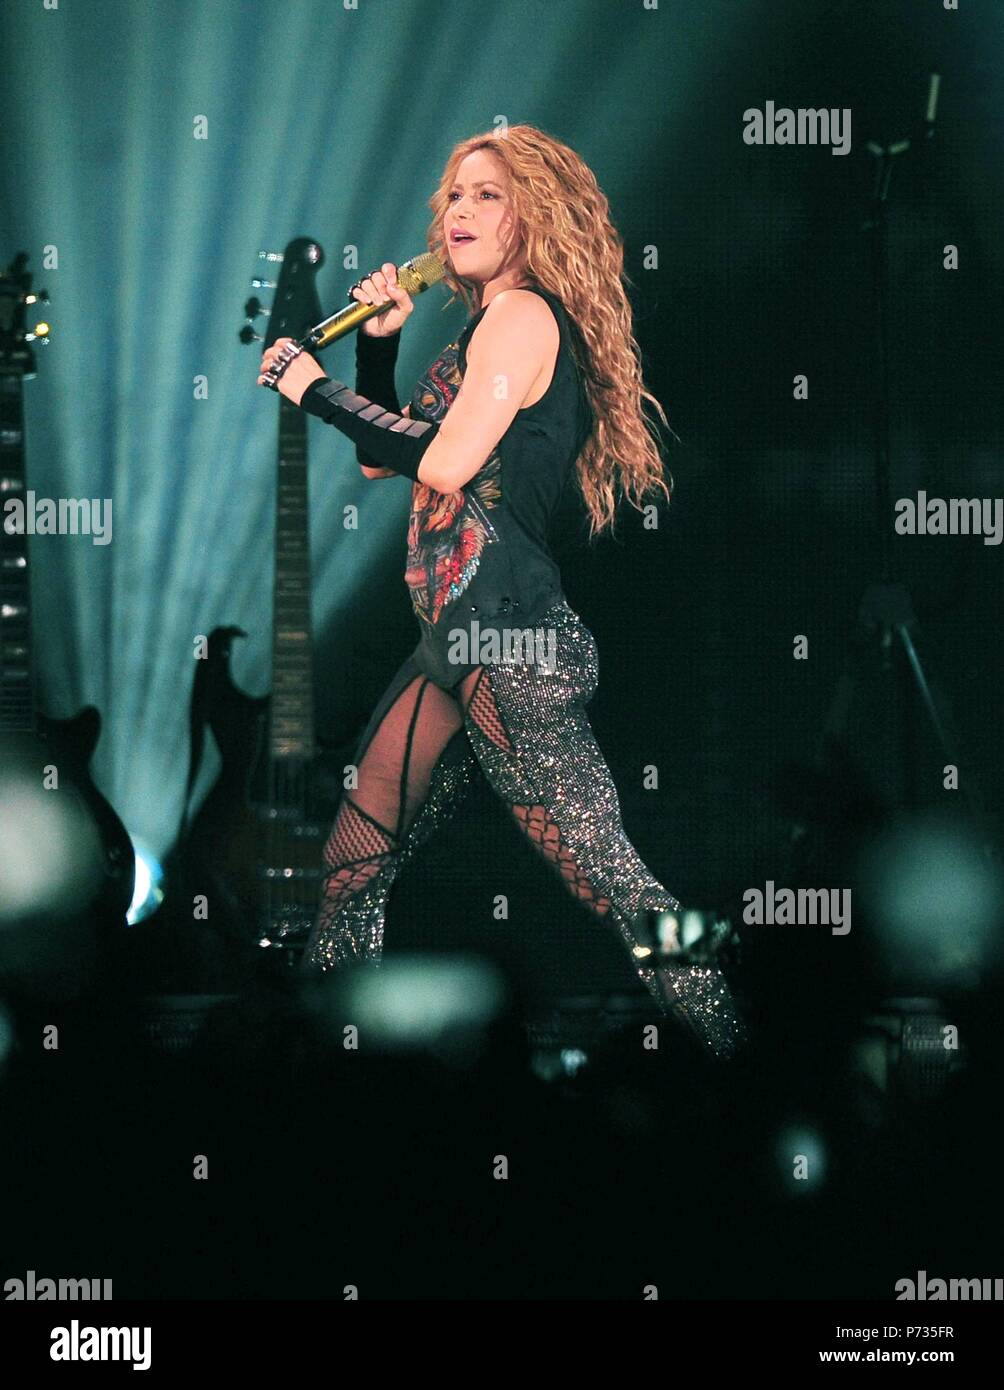 Shakira tour hi-res stock photography and images - Alamy